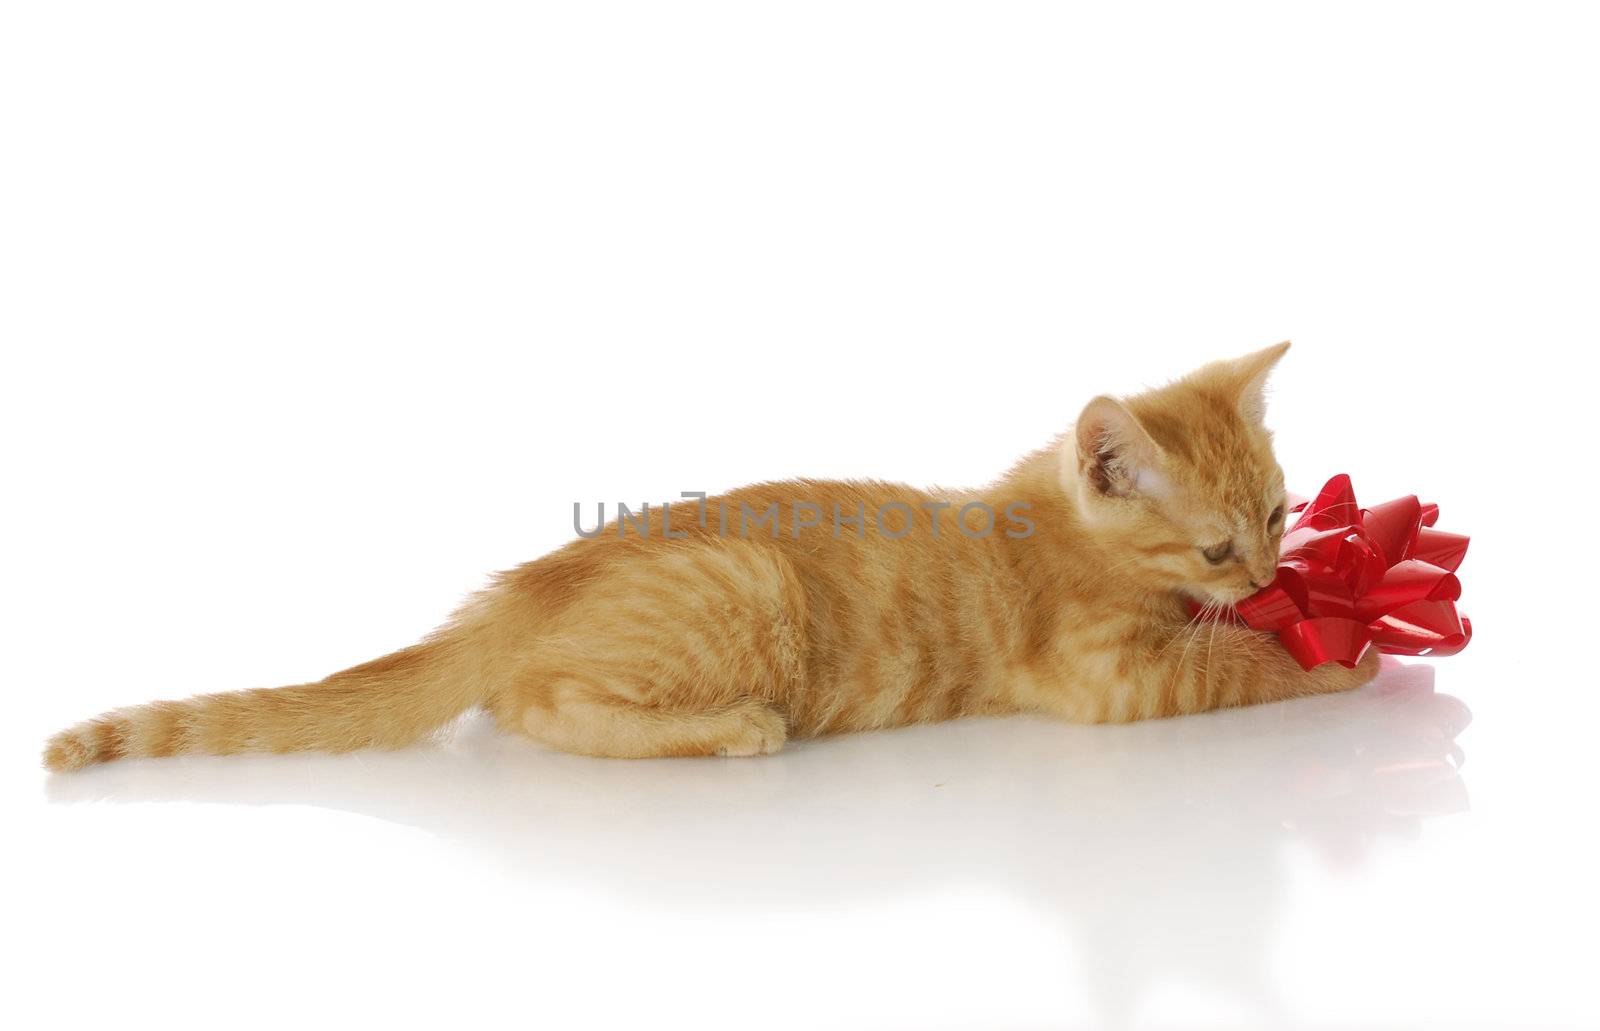 playful kitten by willeecole123